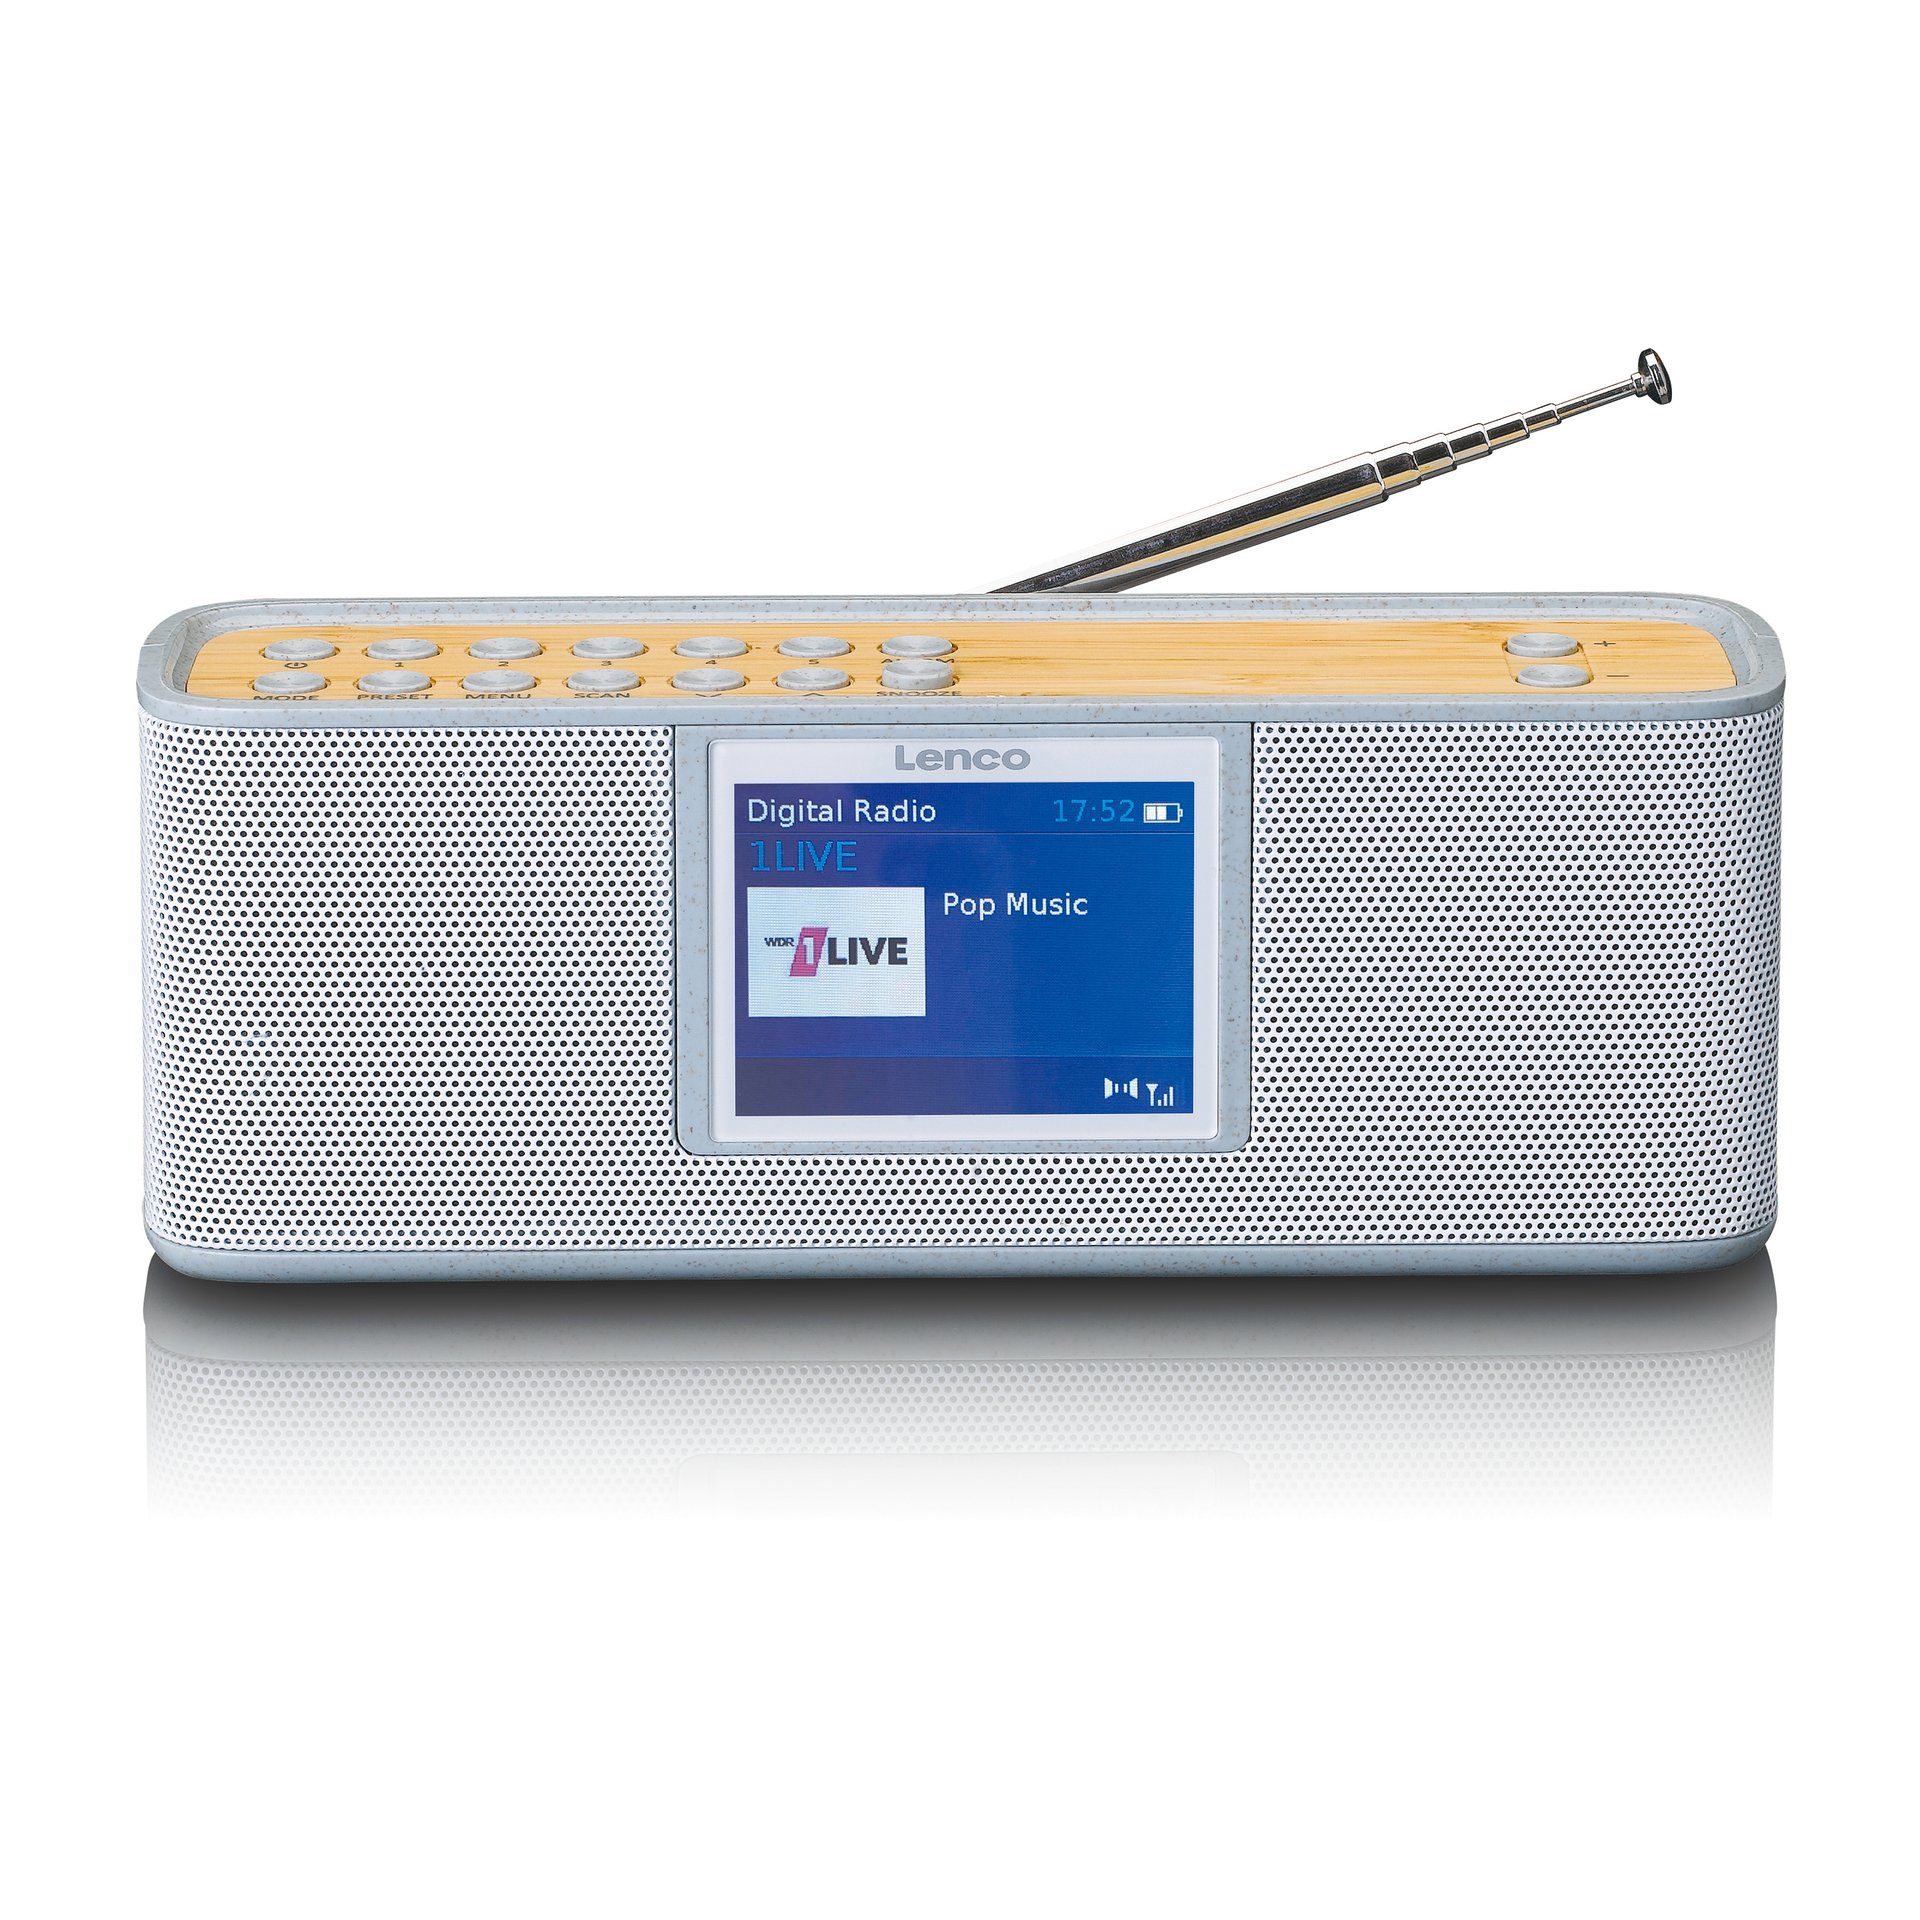 Lenco (DAB) (DAB) - Digitalradio PDR-046GY (Digitalradio Radio DAB+/FM